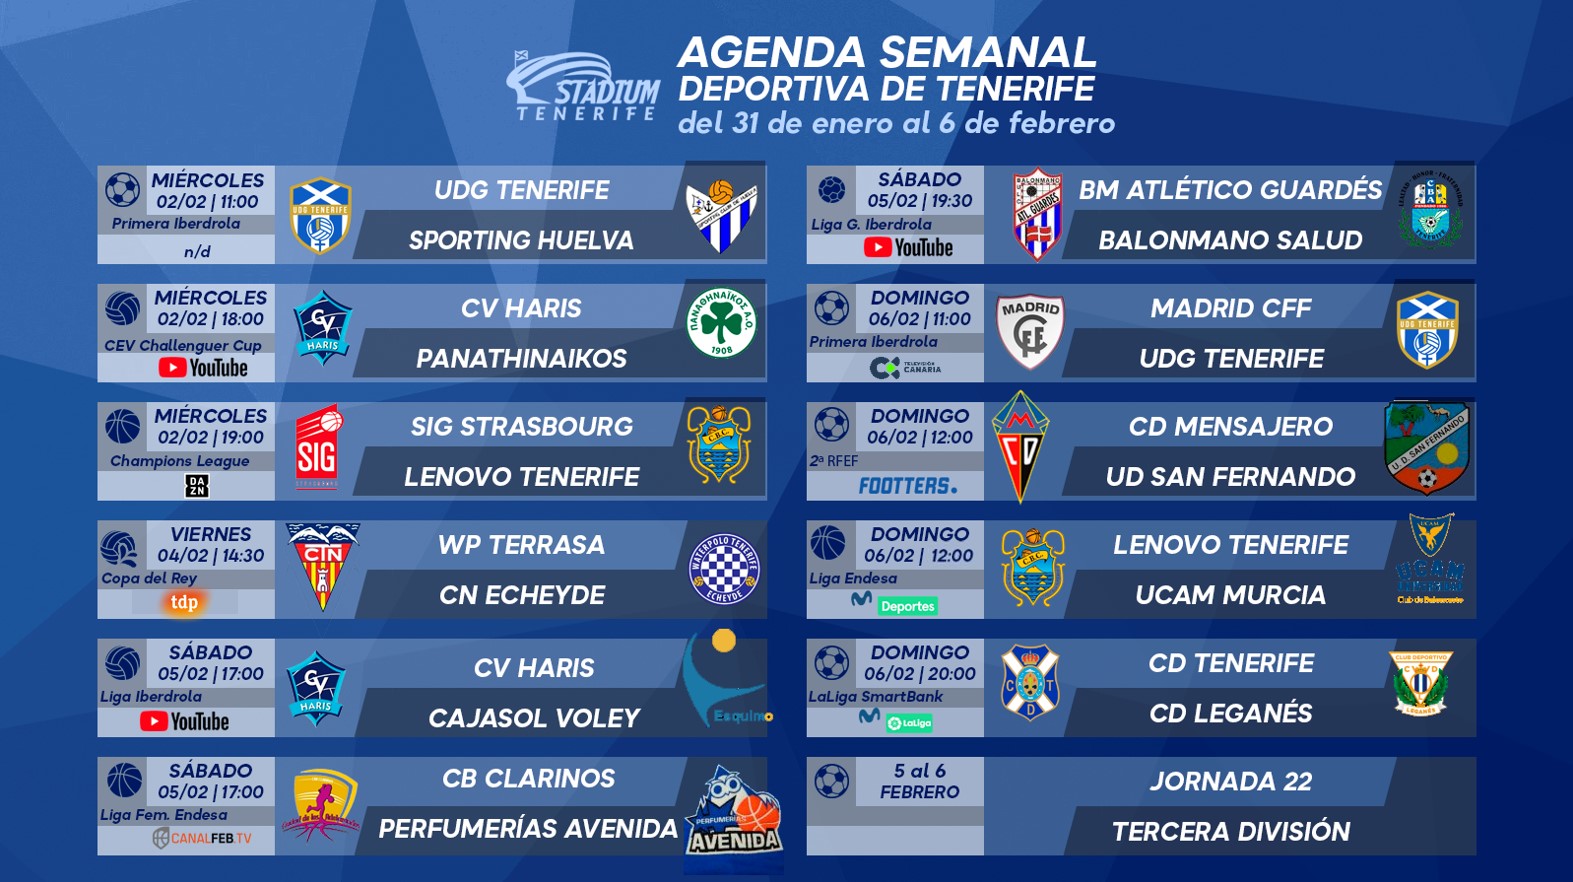 Agenda Semanal Deportiva de Tenerife (31 de enero al 6 de febrero)